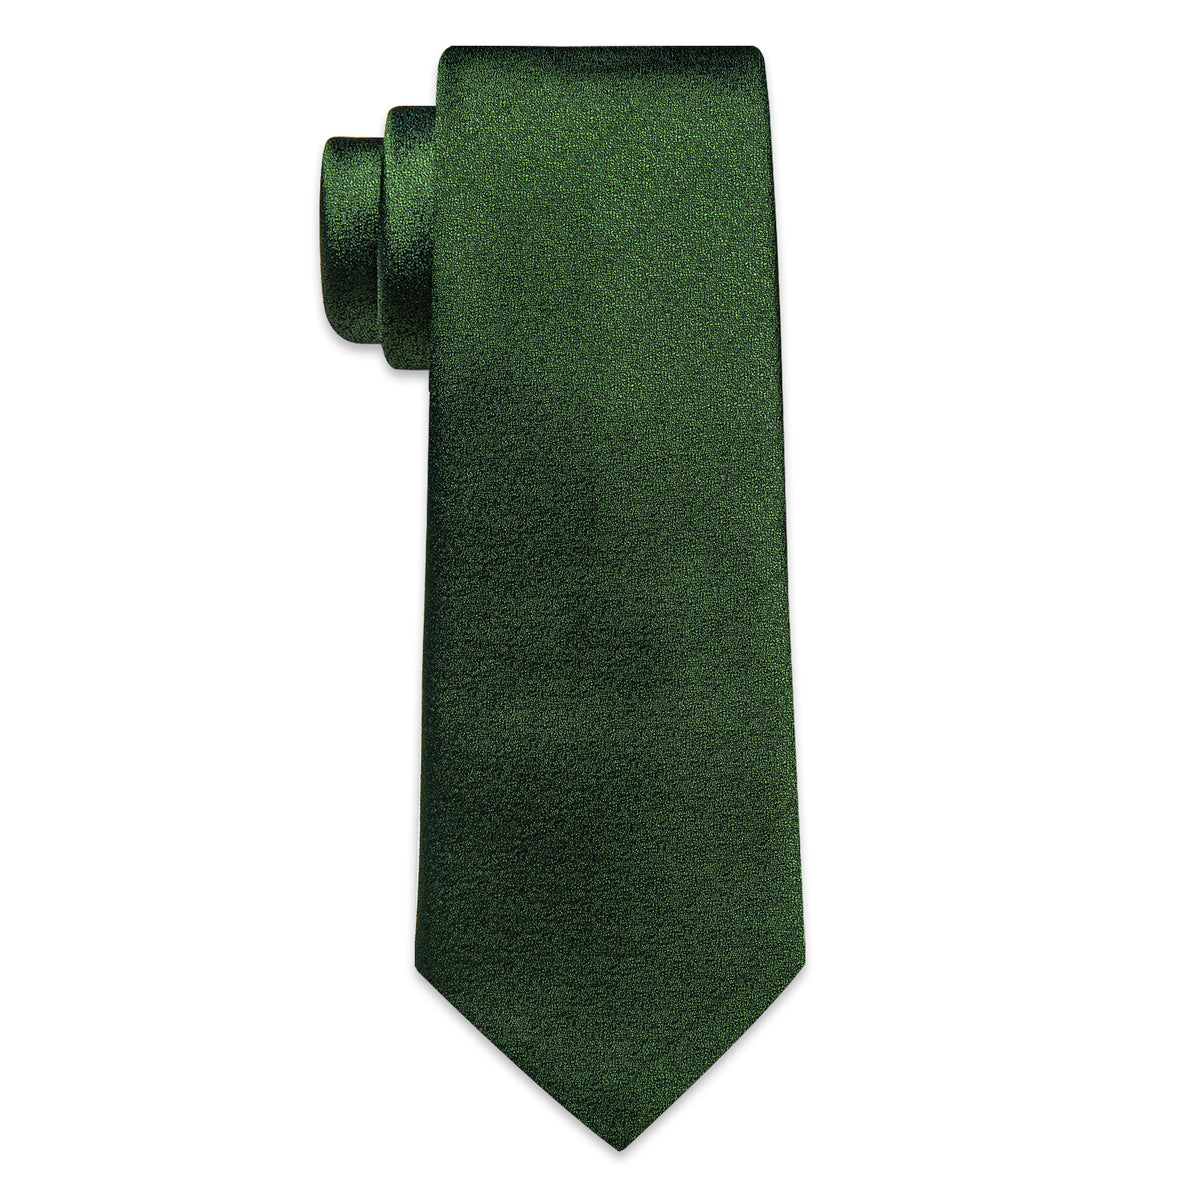 Shining Grass Green Solid Men's Necktie Pocket Square Cufflinks Set